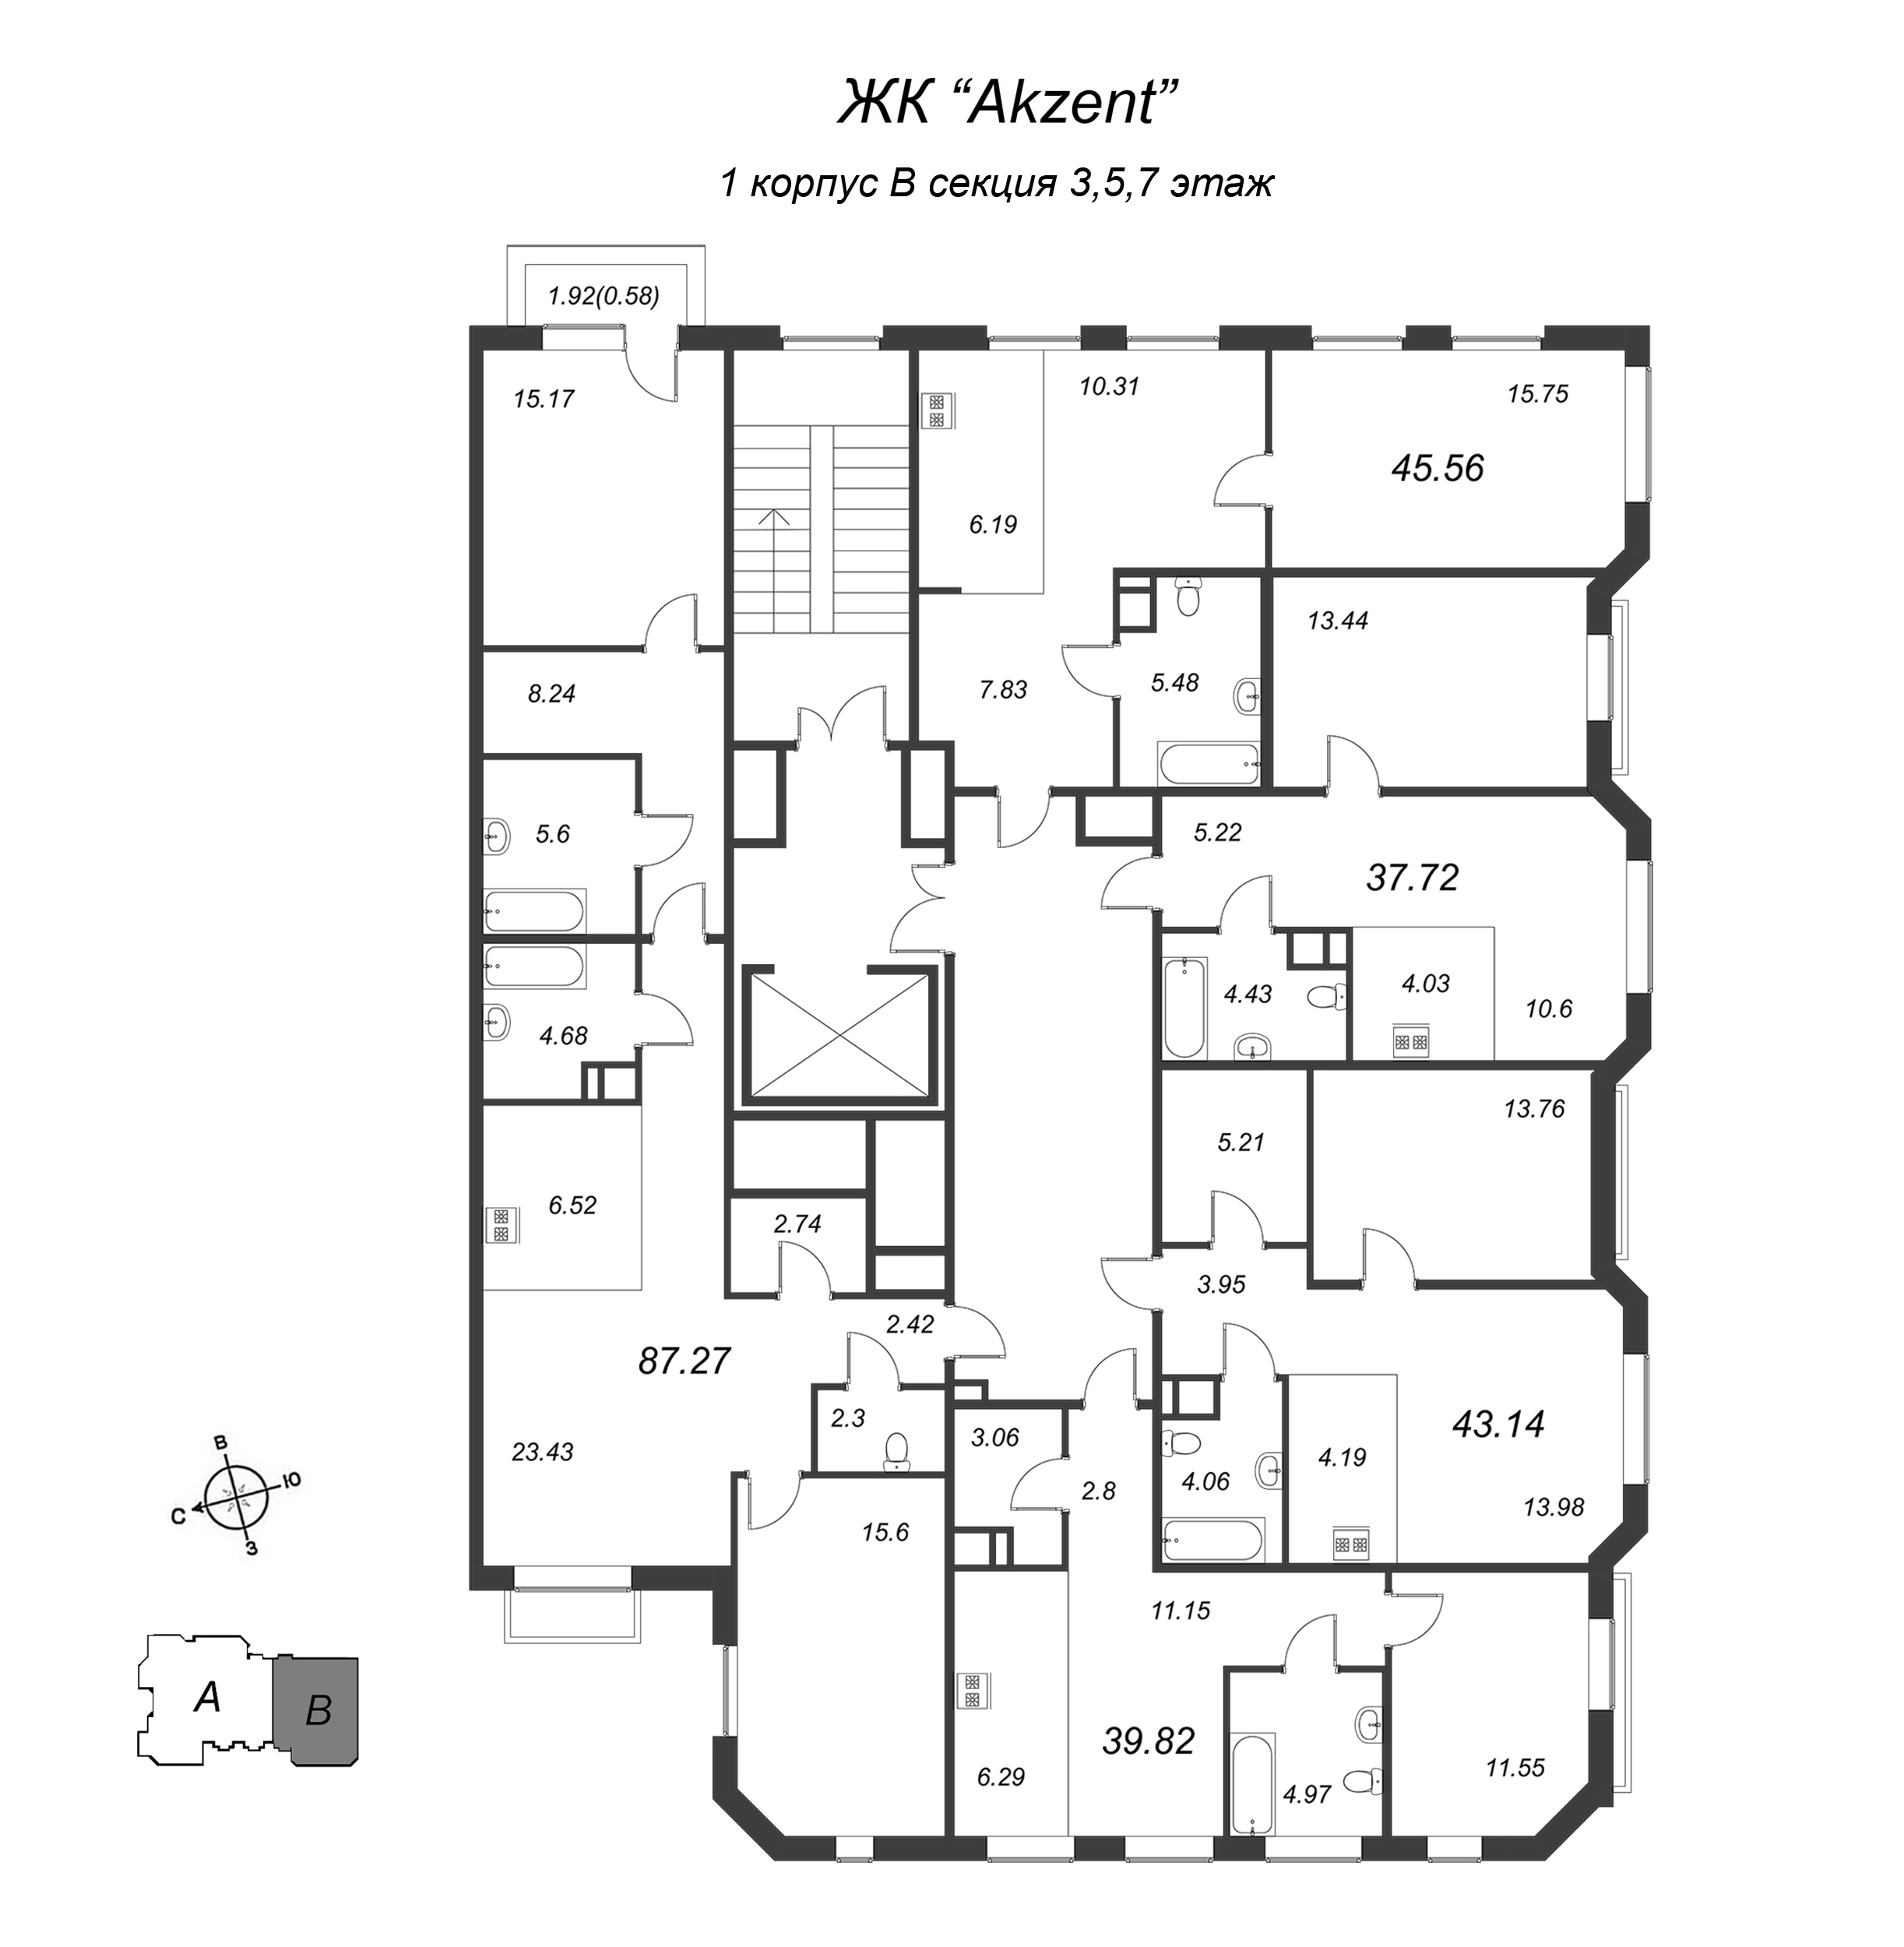 2-комнатная (Евро) квартира, 39.82 м² - планировка этажа